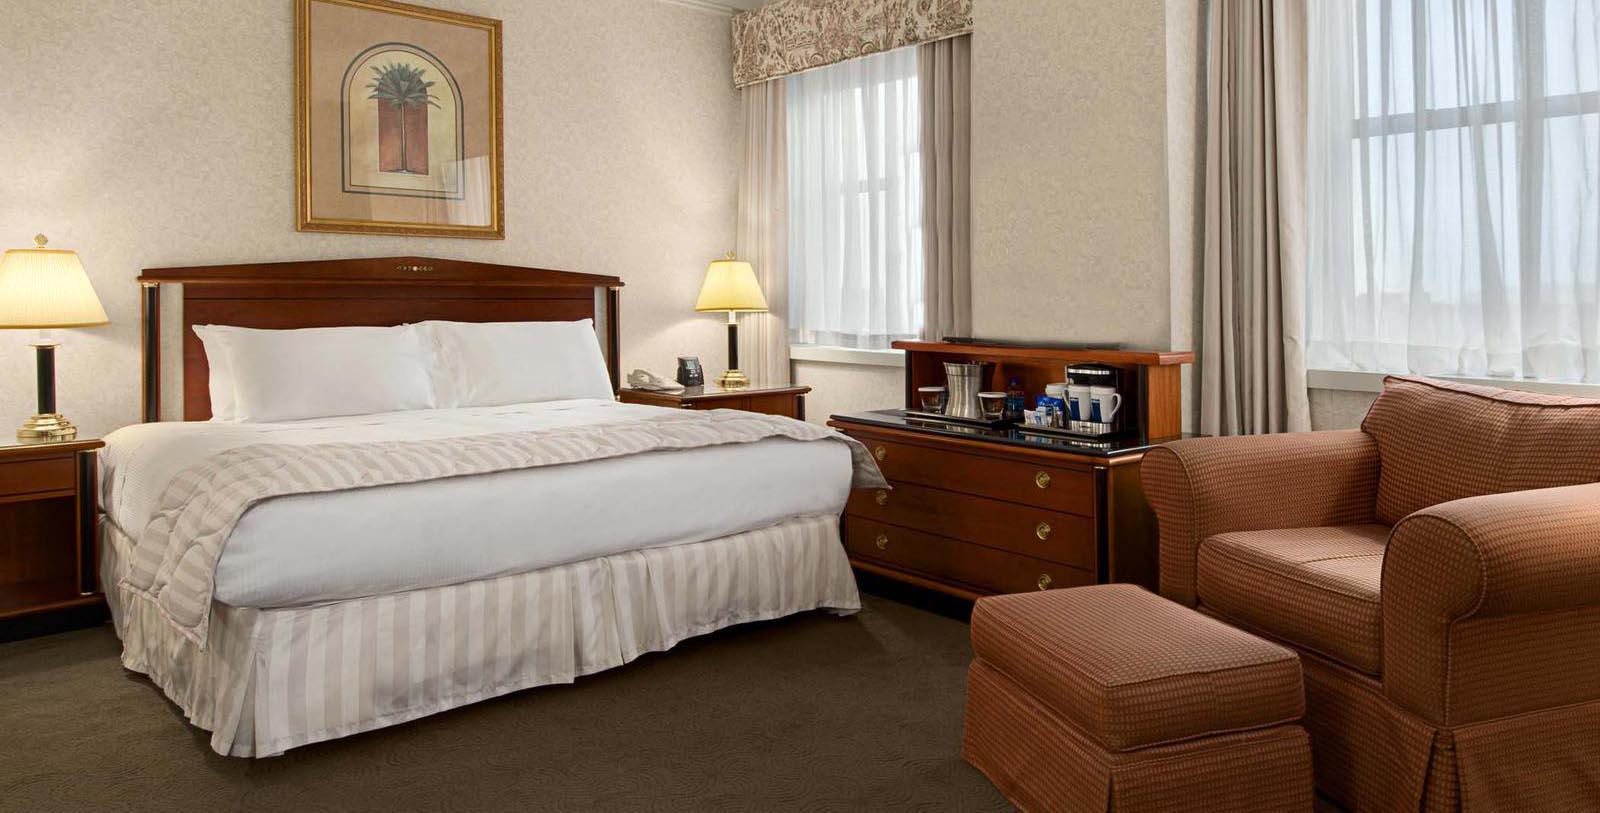 Image of guestroom Hilton Cincinnati Netherland Plaza, 1931, Member of Historic Hotels of America, in Cincinnati, Ohio,Accommodations